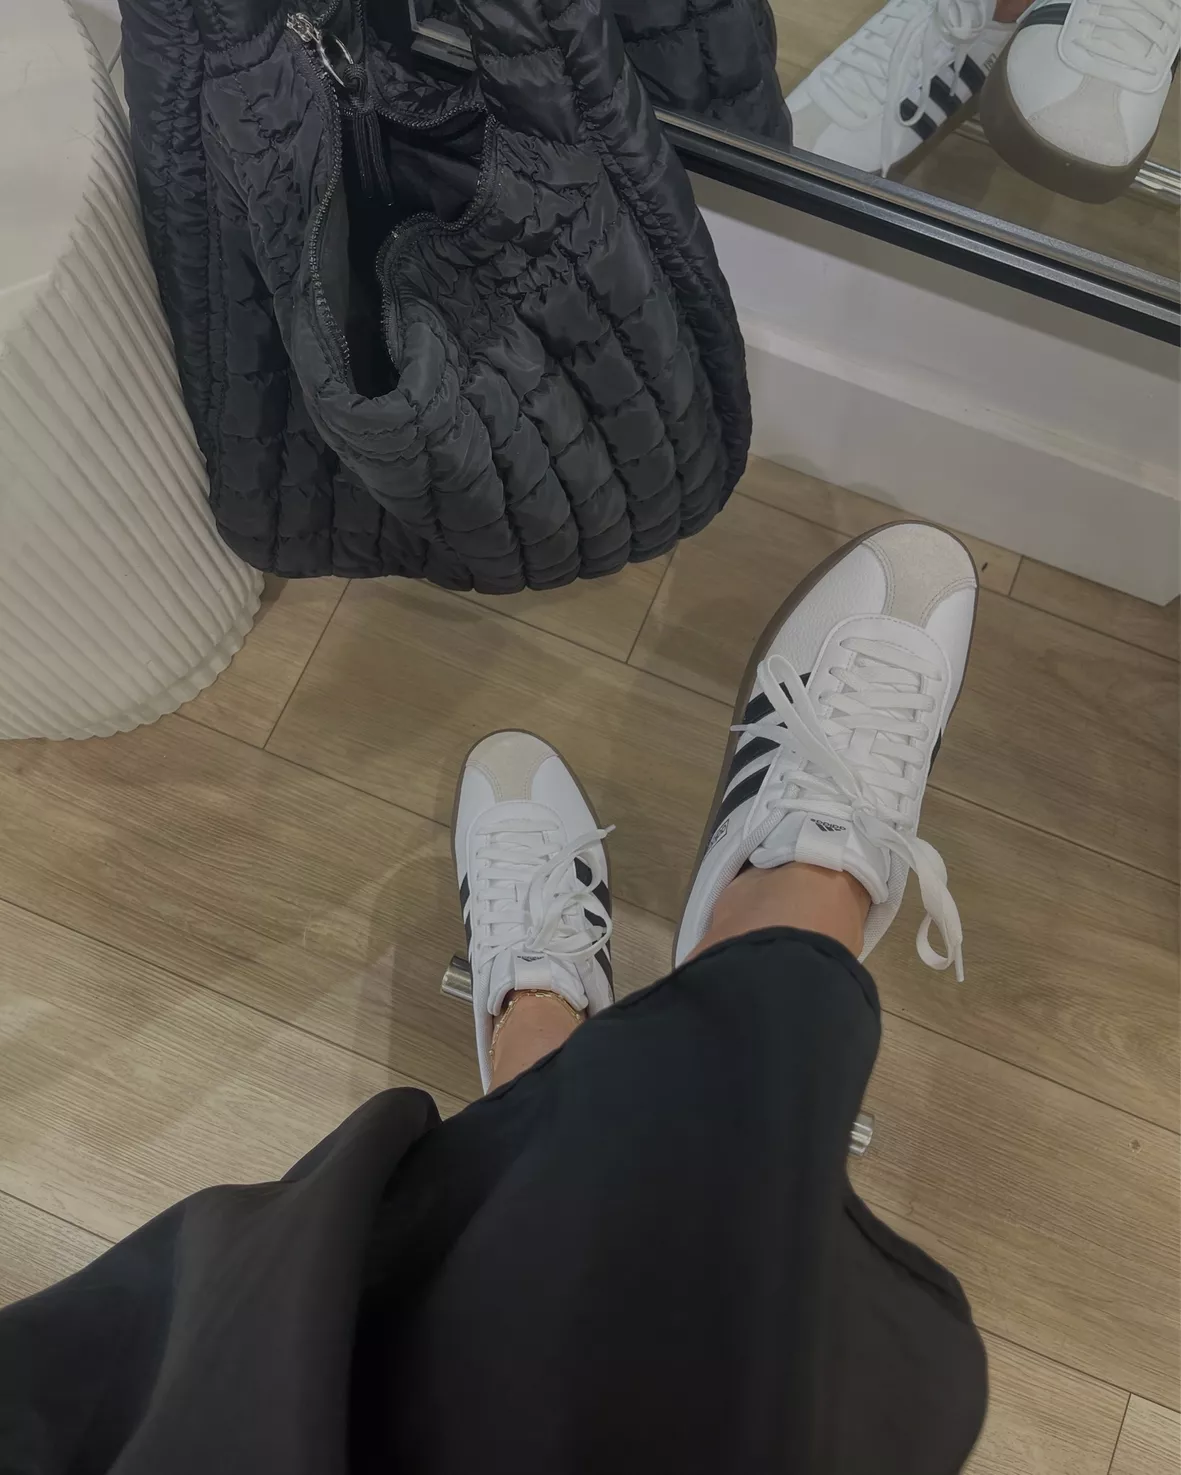 Adidas Womens Vl Court 3.0 Sneaker - White